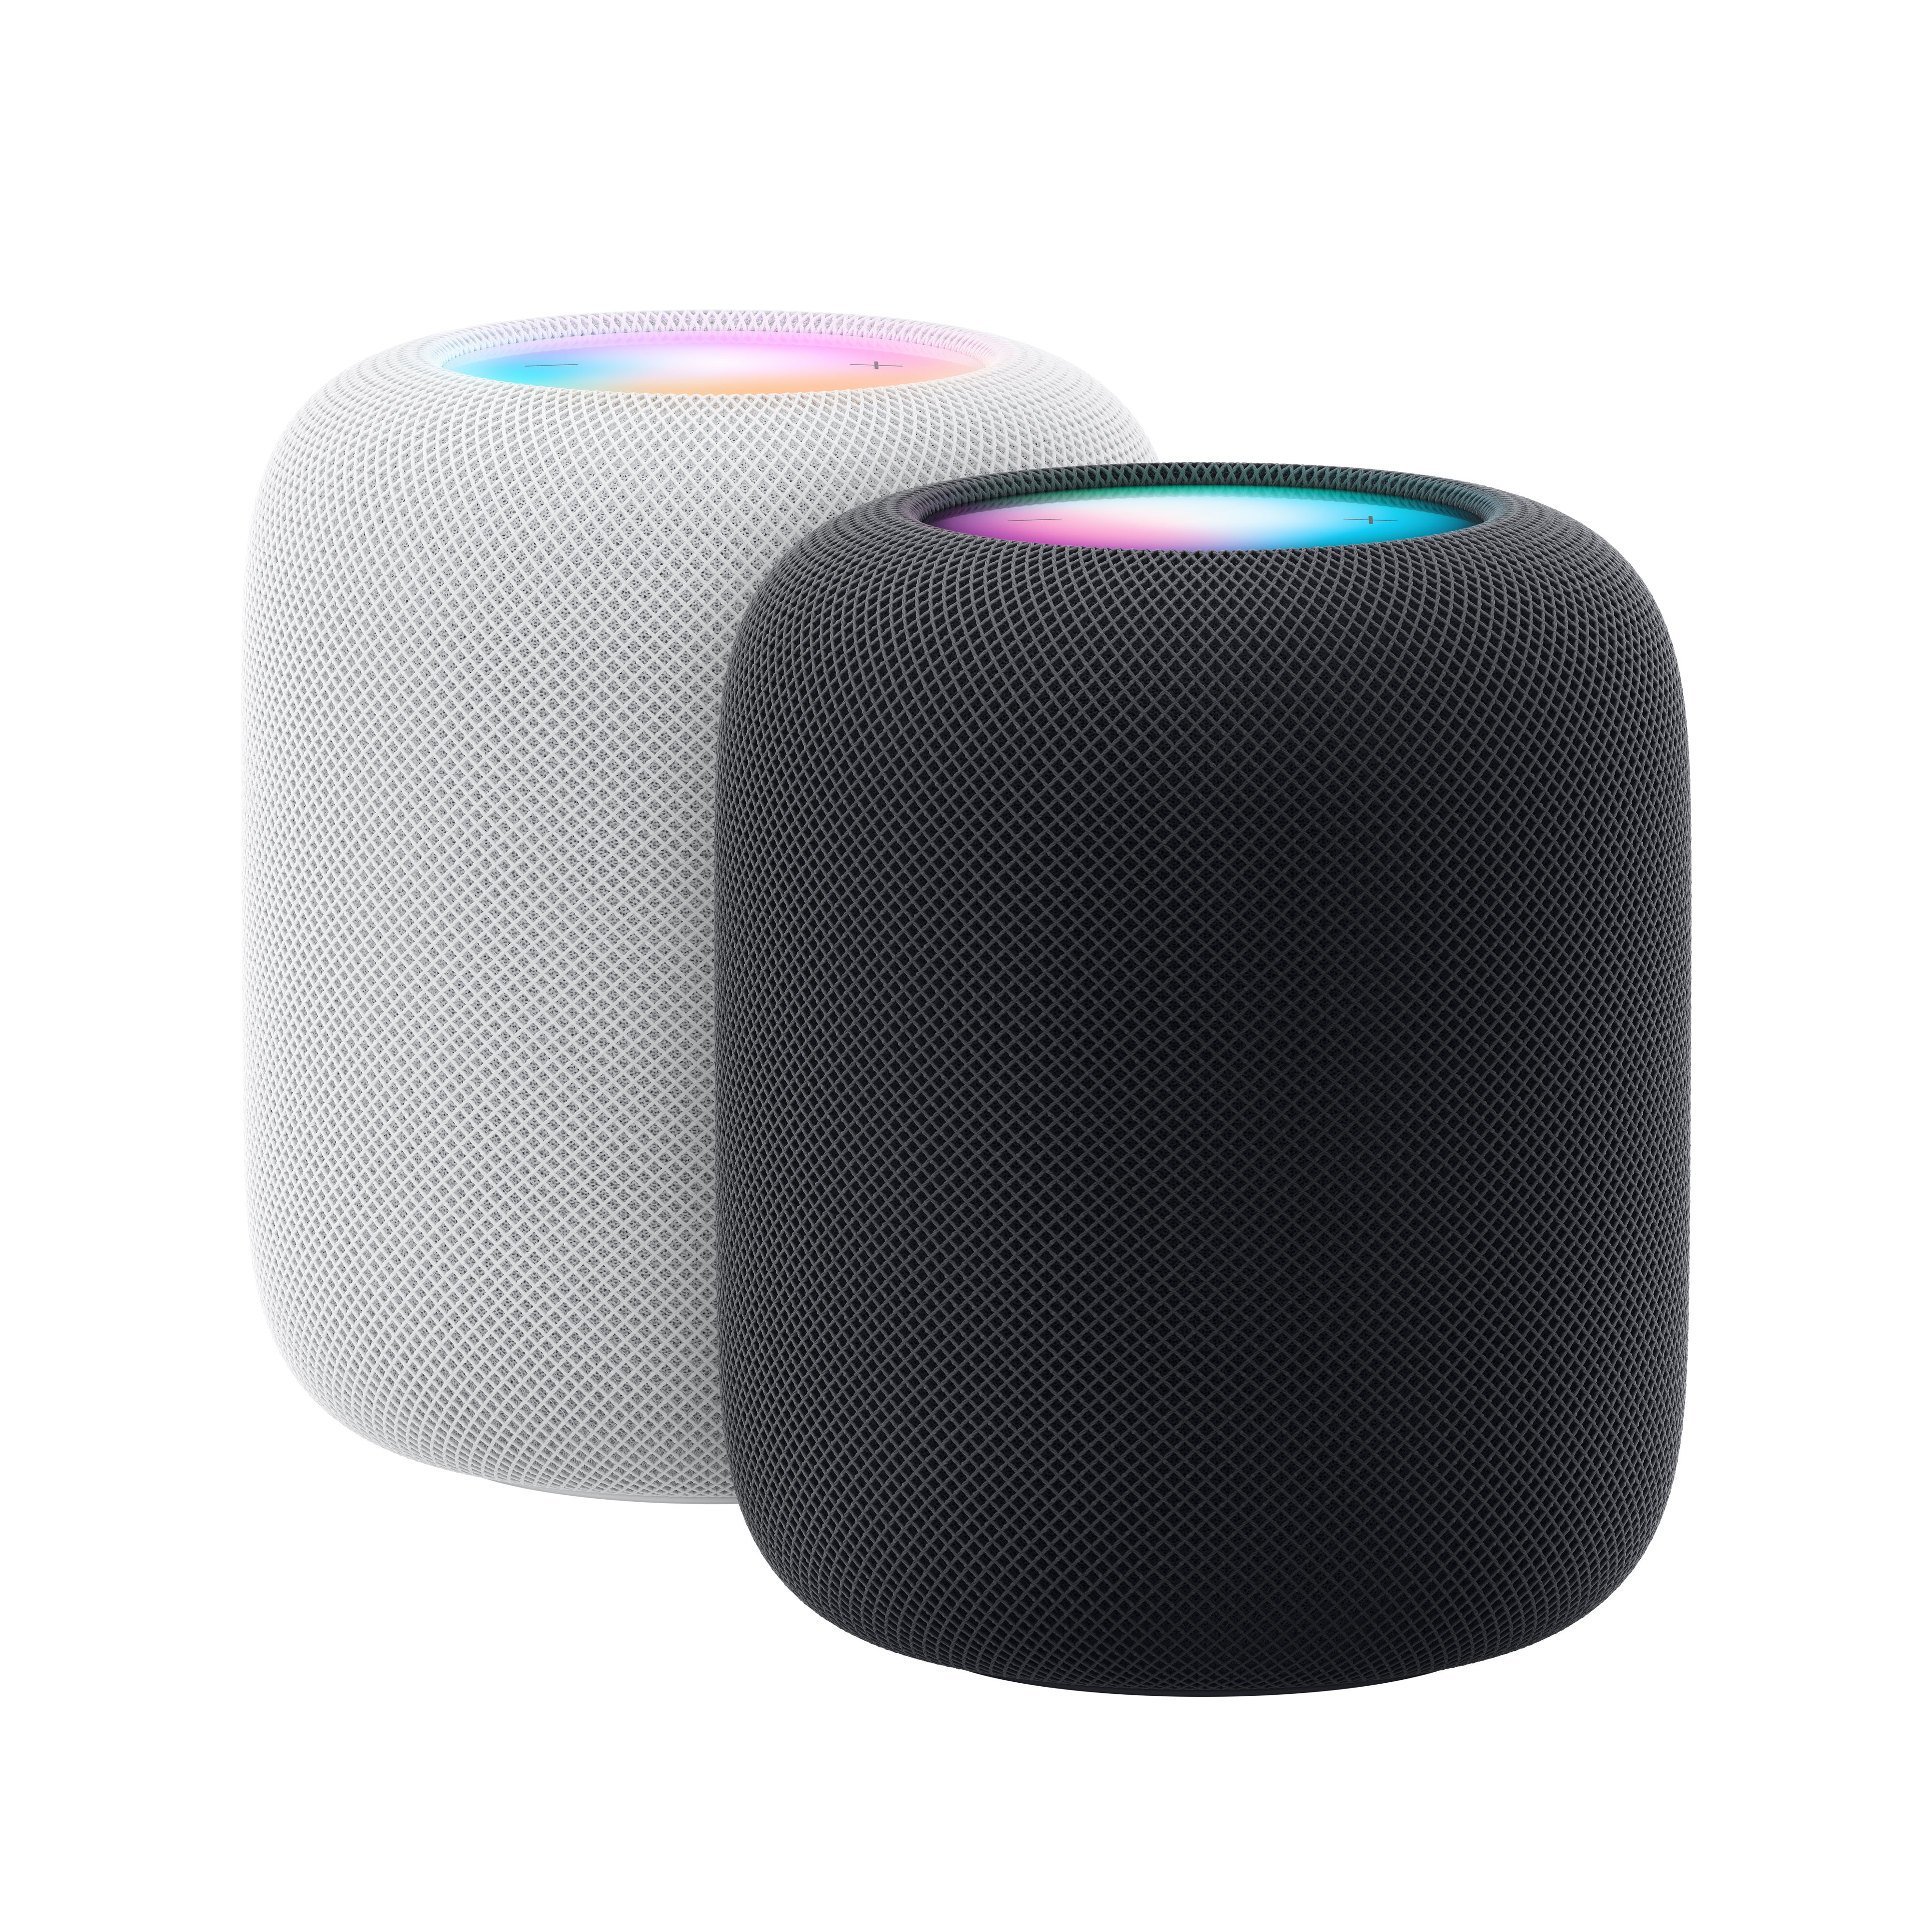 Apple HomePod Smart Speaker Bianco